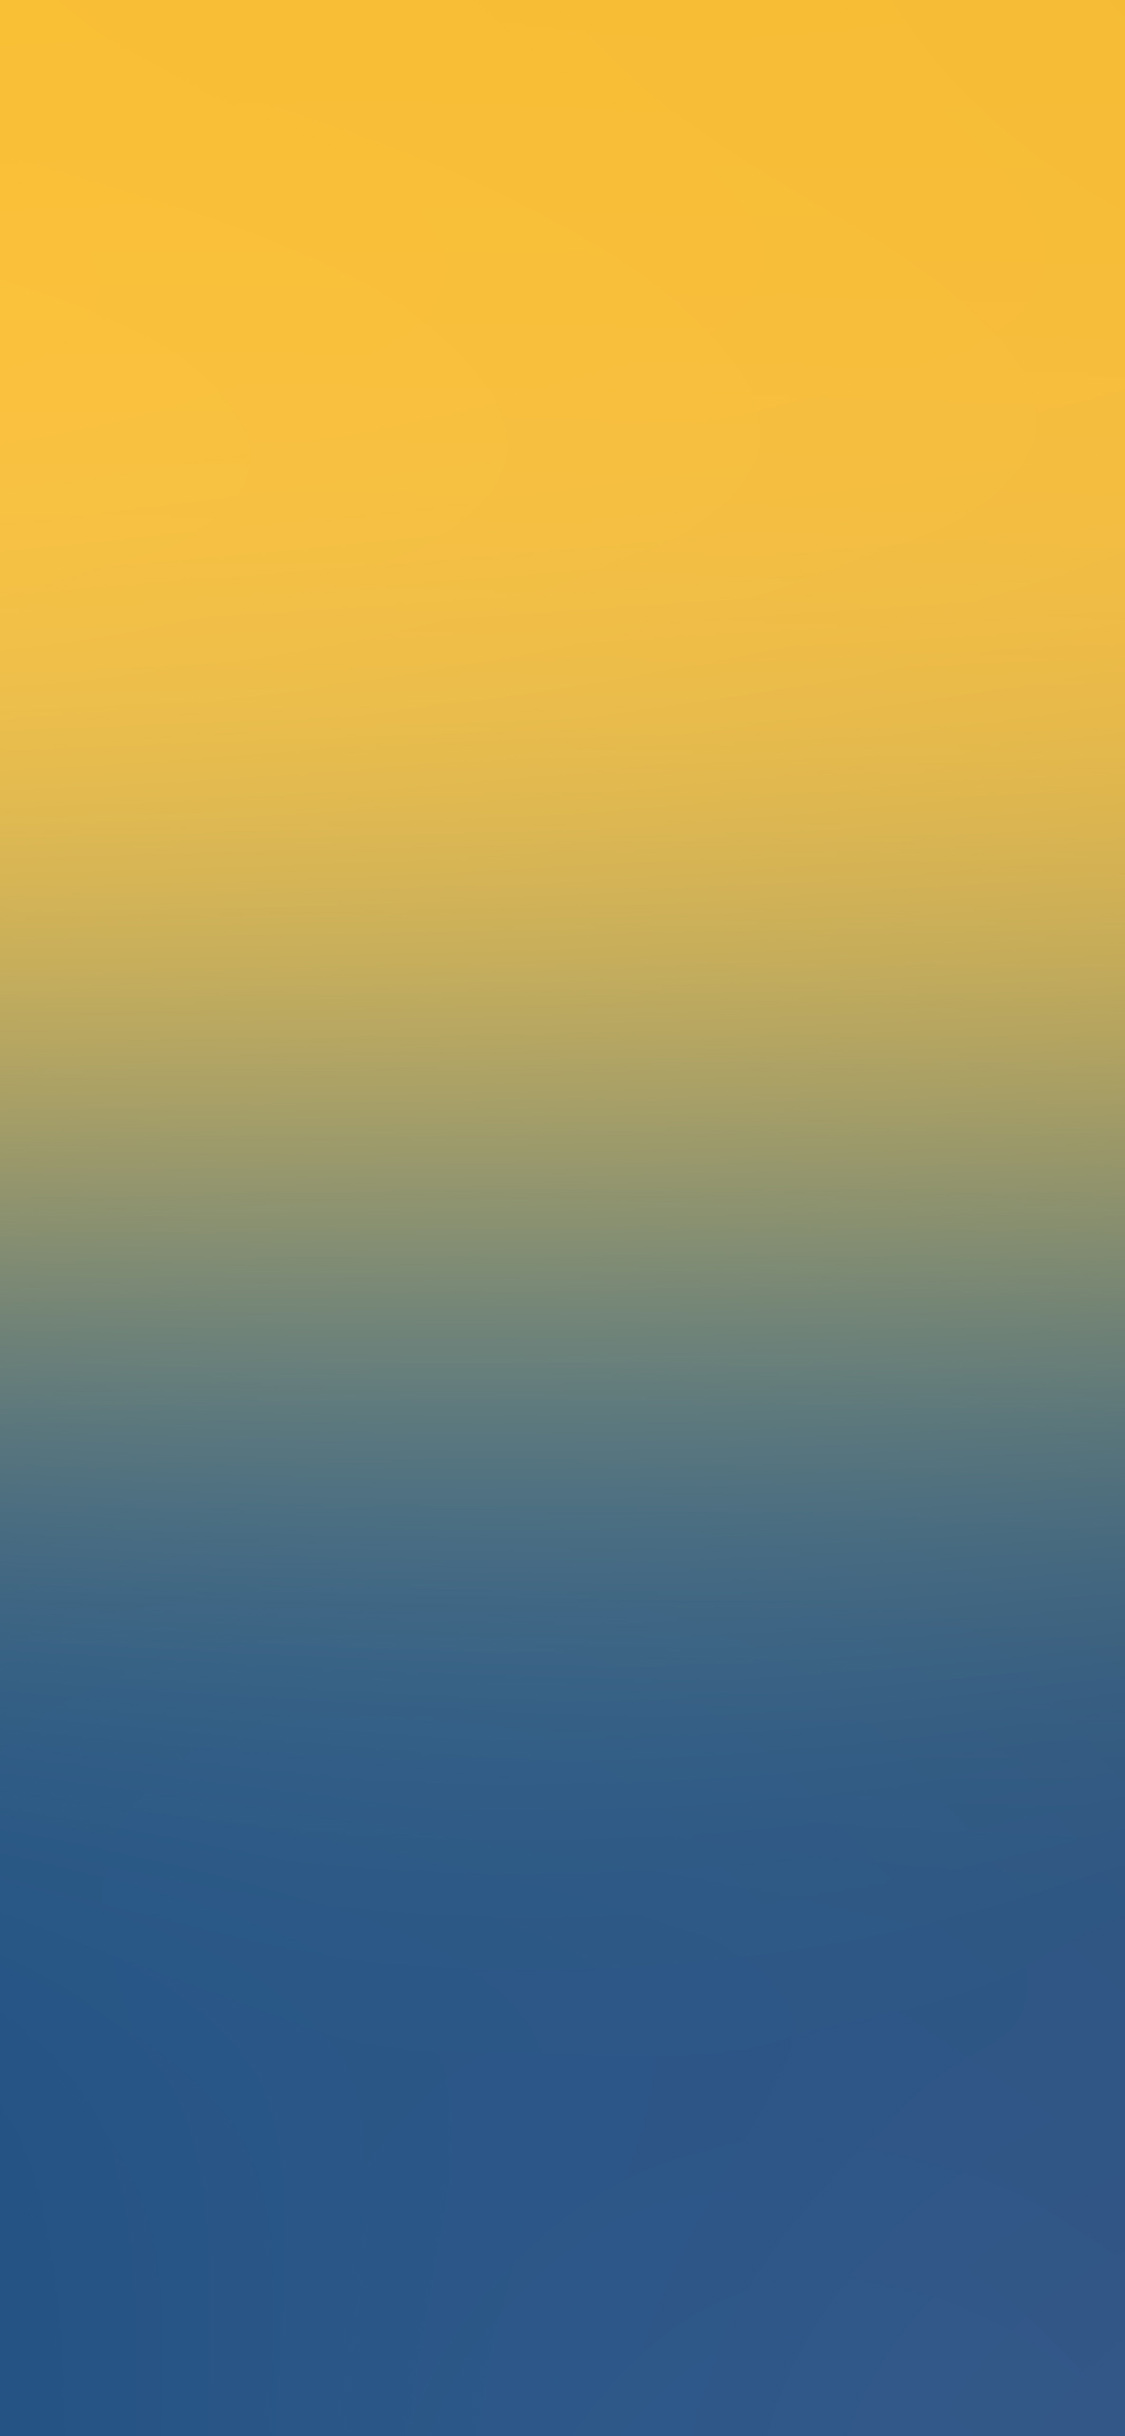 iPhone X wallpaper. spring yellow blue gradation blur